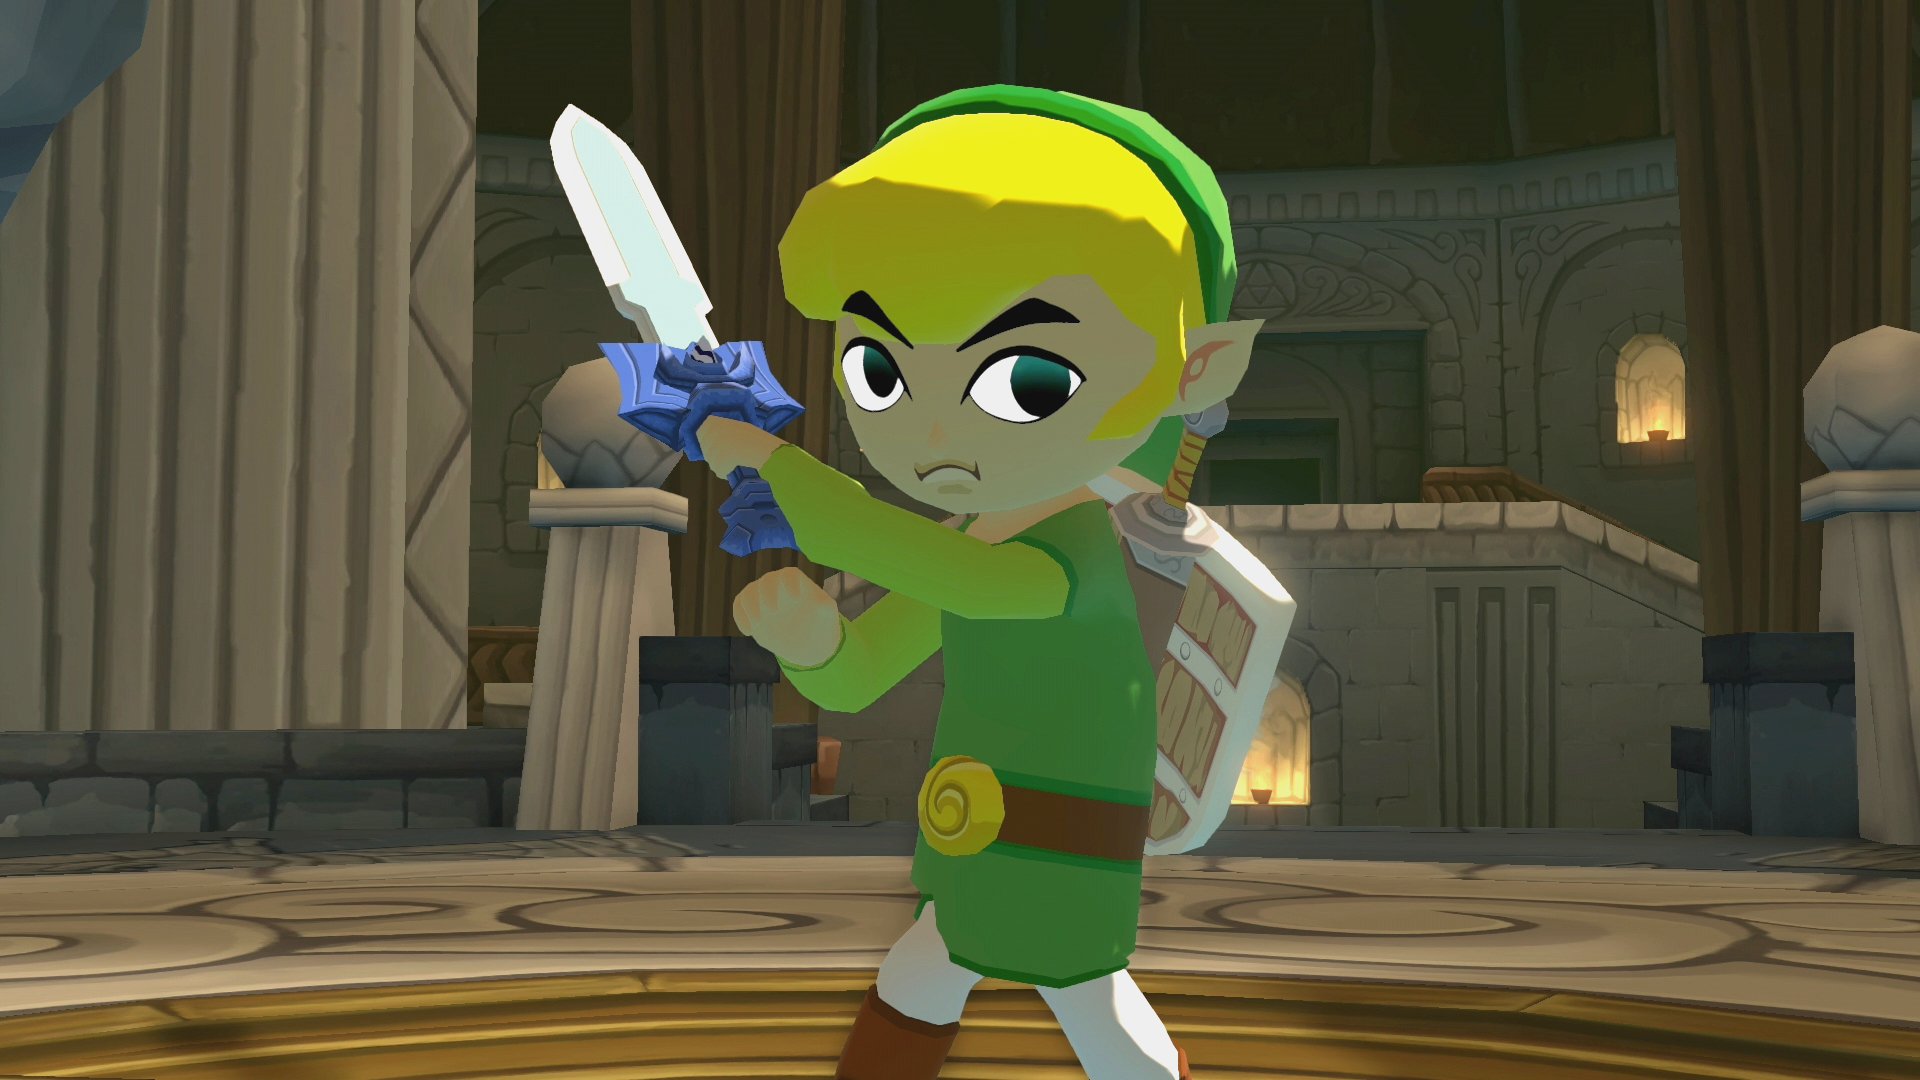 Nintendo Destroyed Tradition to Create Zelda's Open World